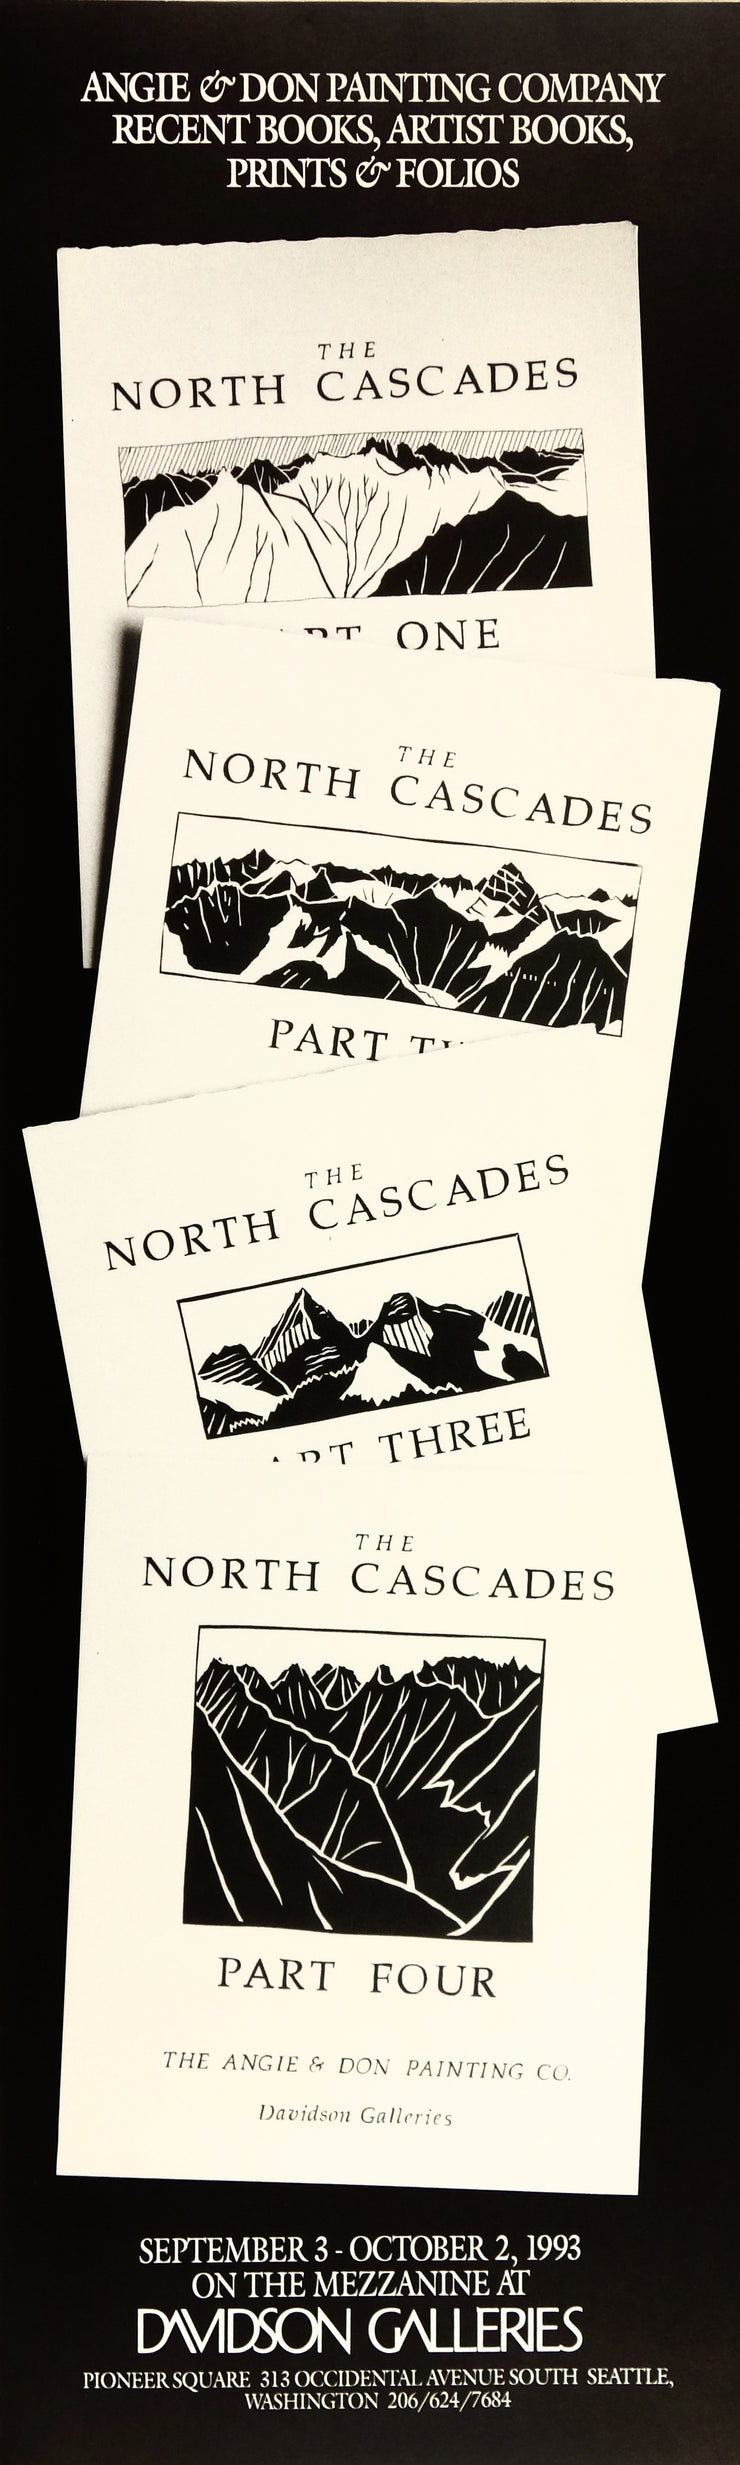 The North Cascades Portfolio Poster by Patrick Anderson - Davidson Galleries